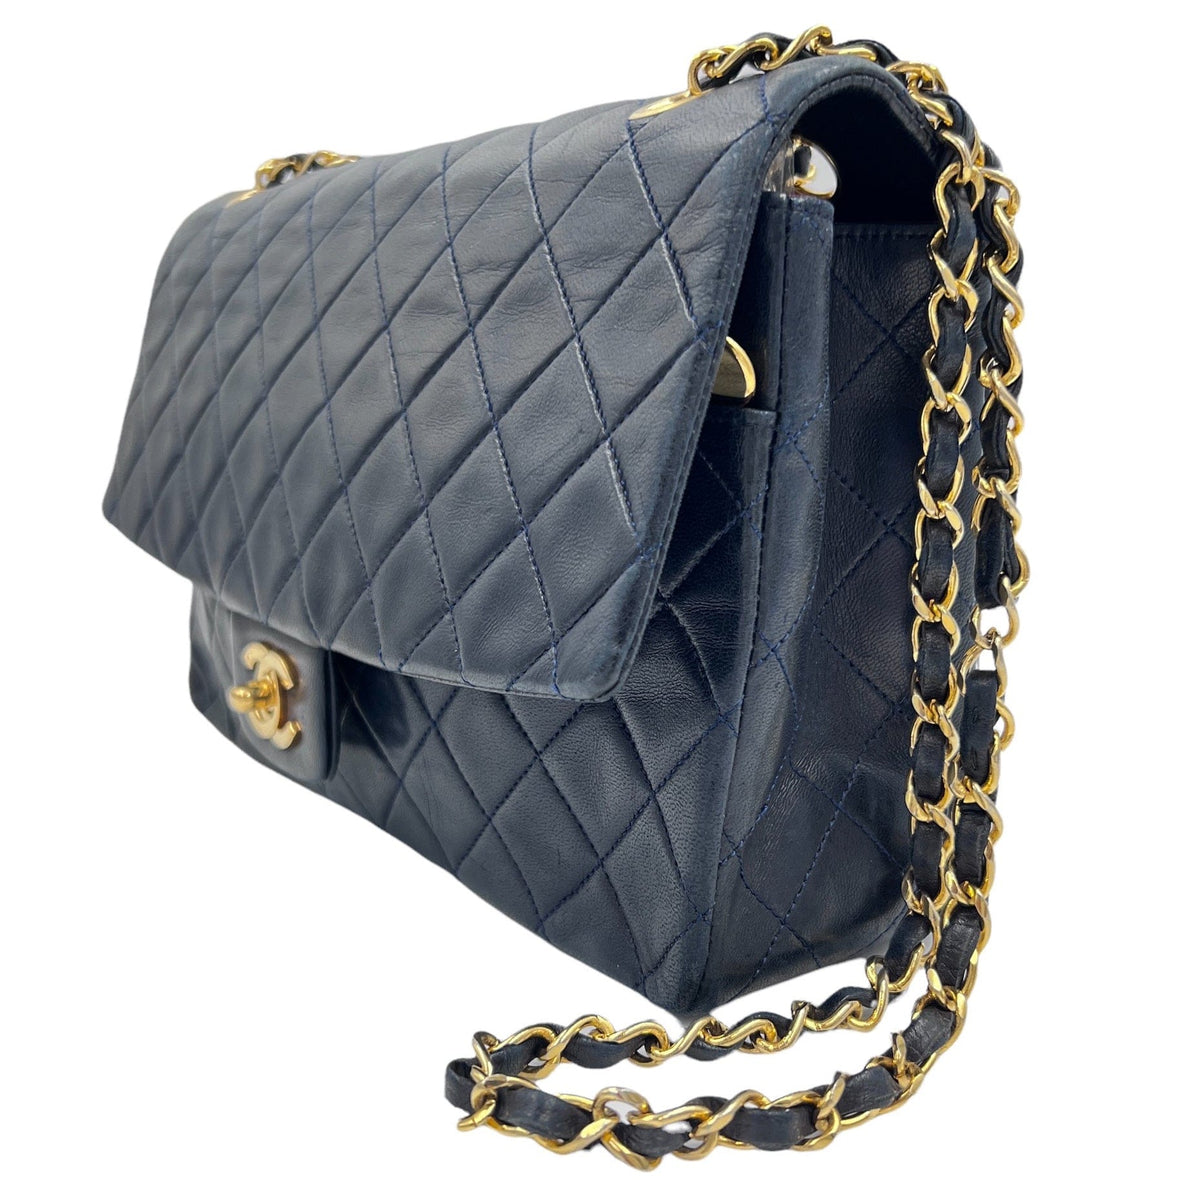 CHANEL Classic Vintage Medium Quilted Leather Flap Shoulder Bag - Midnight  Blue/Black